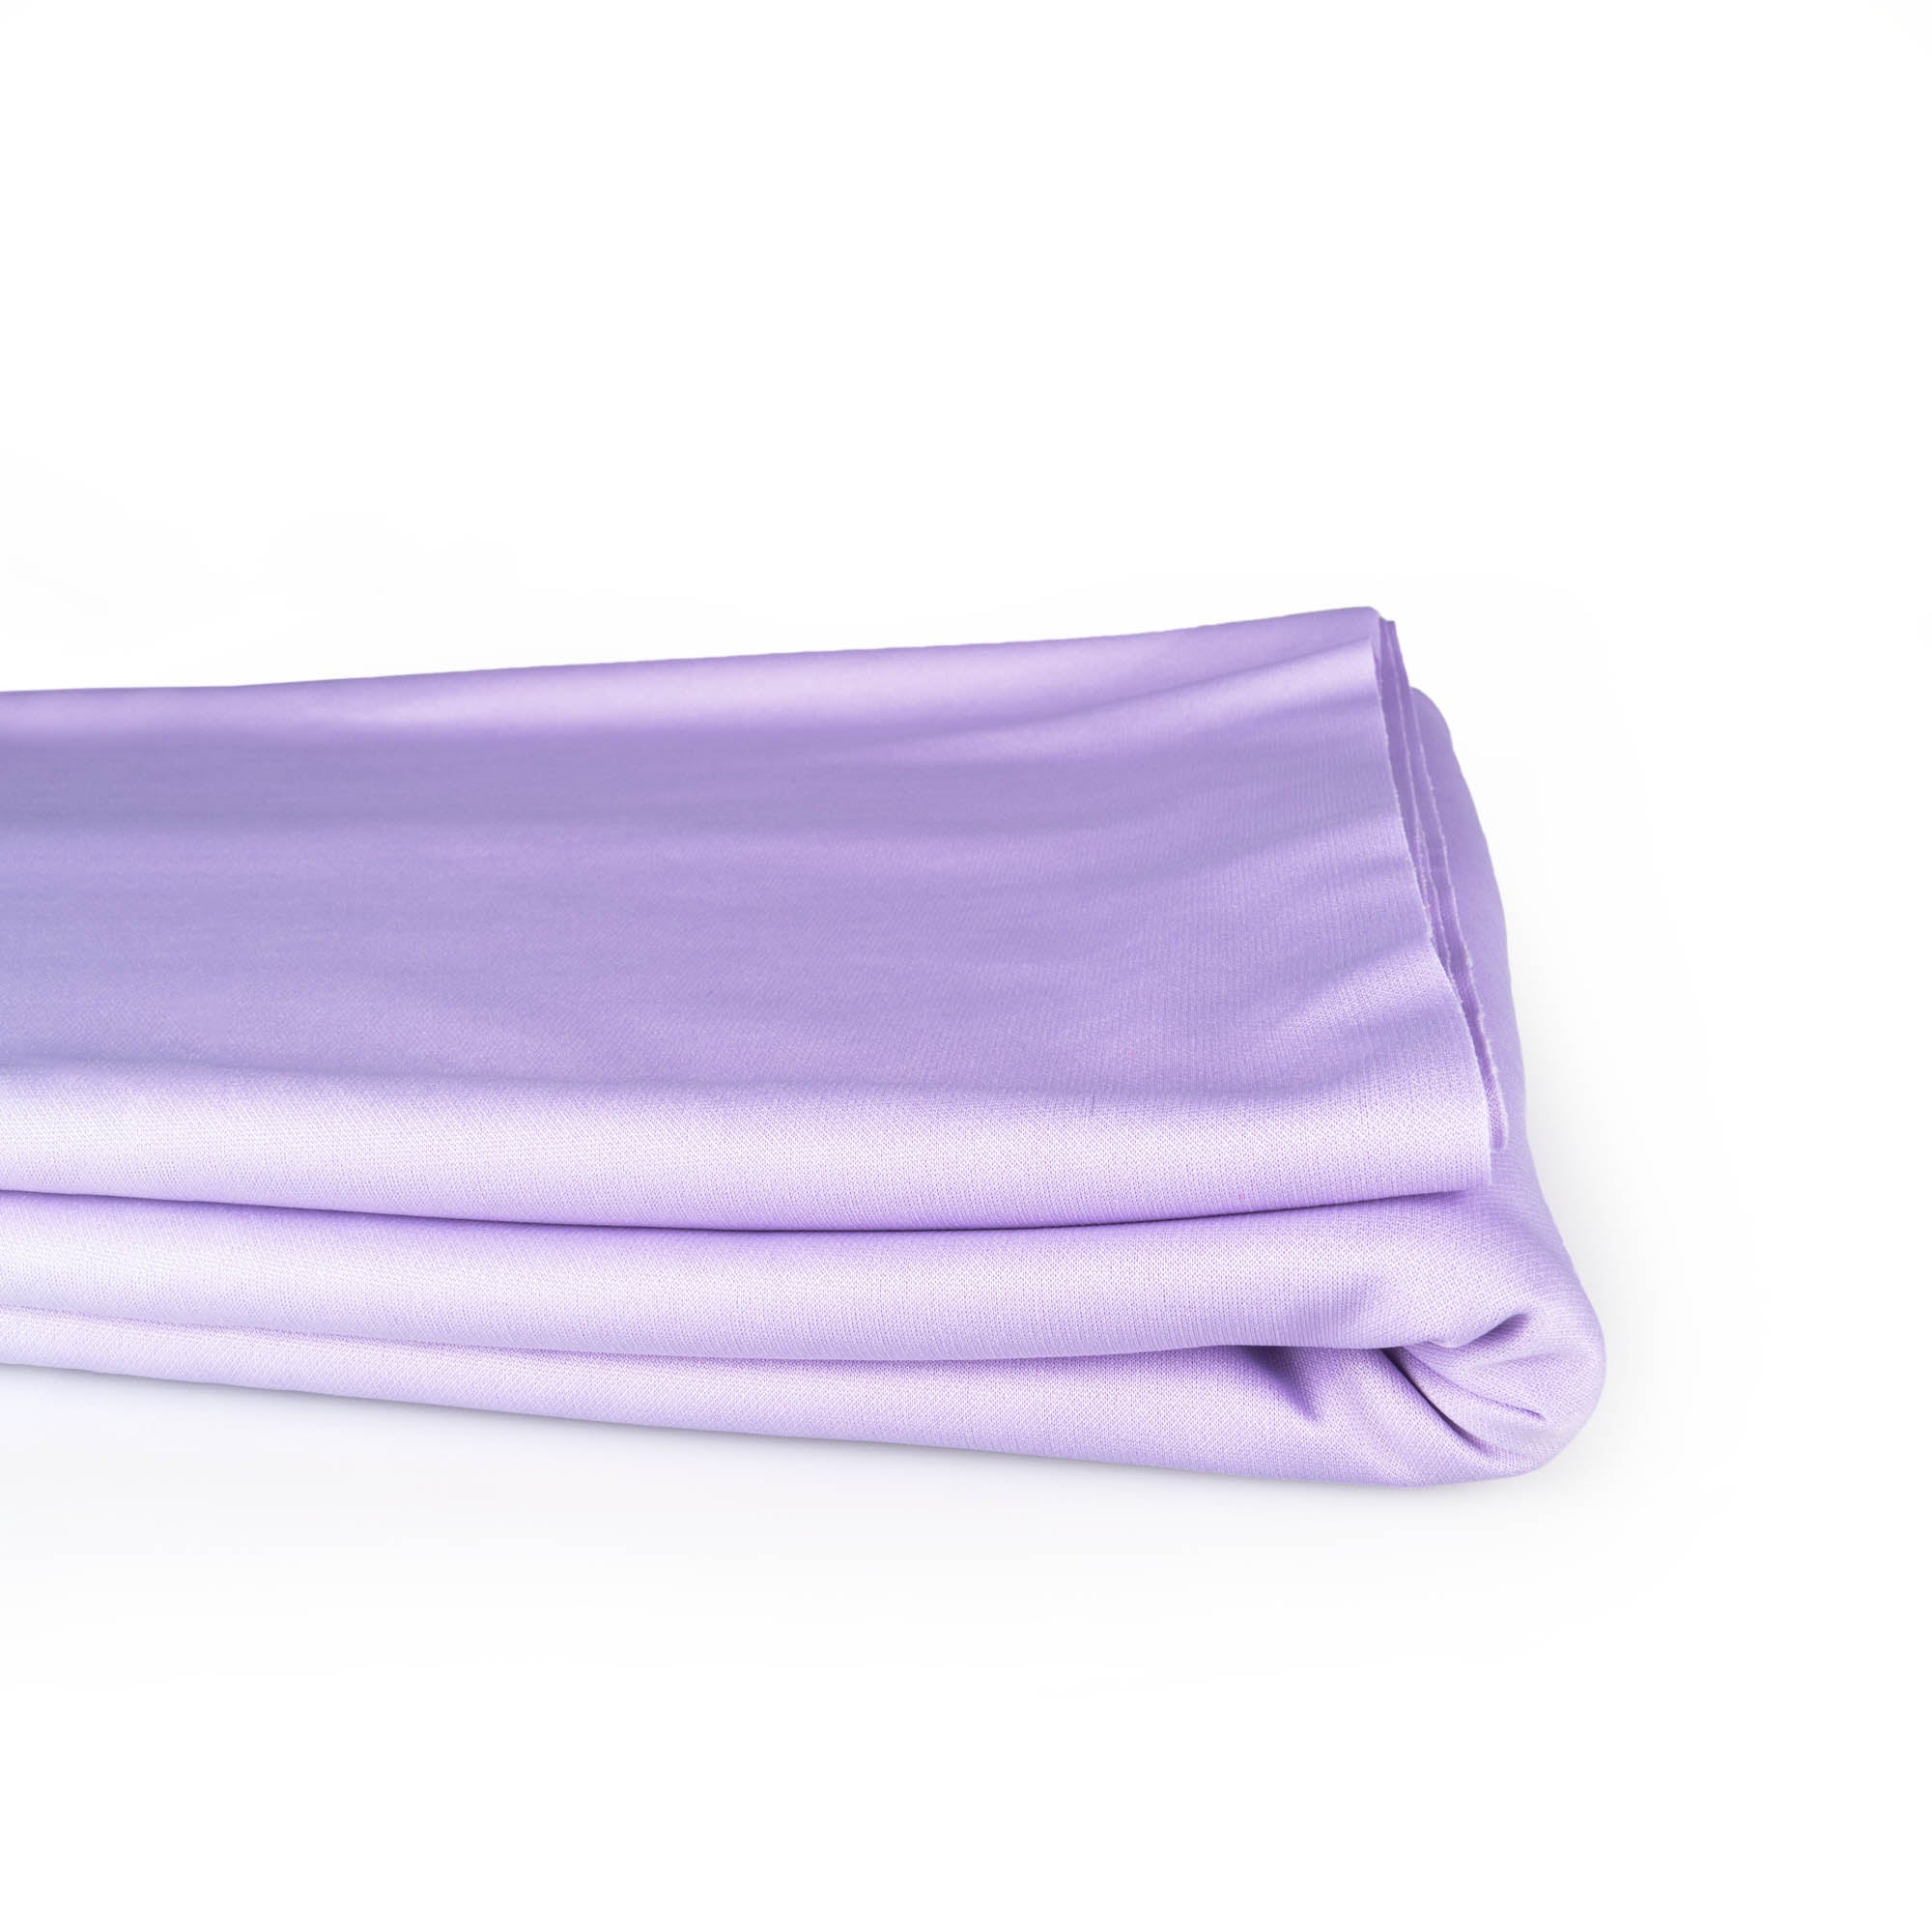 Lavender silk folded